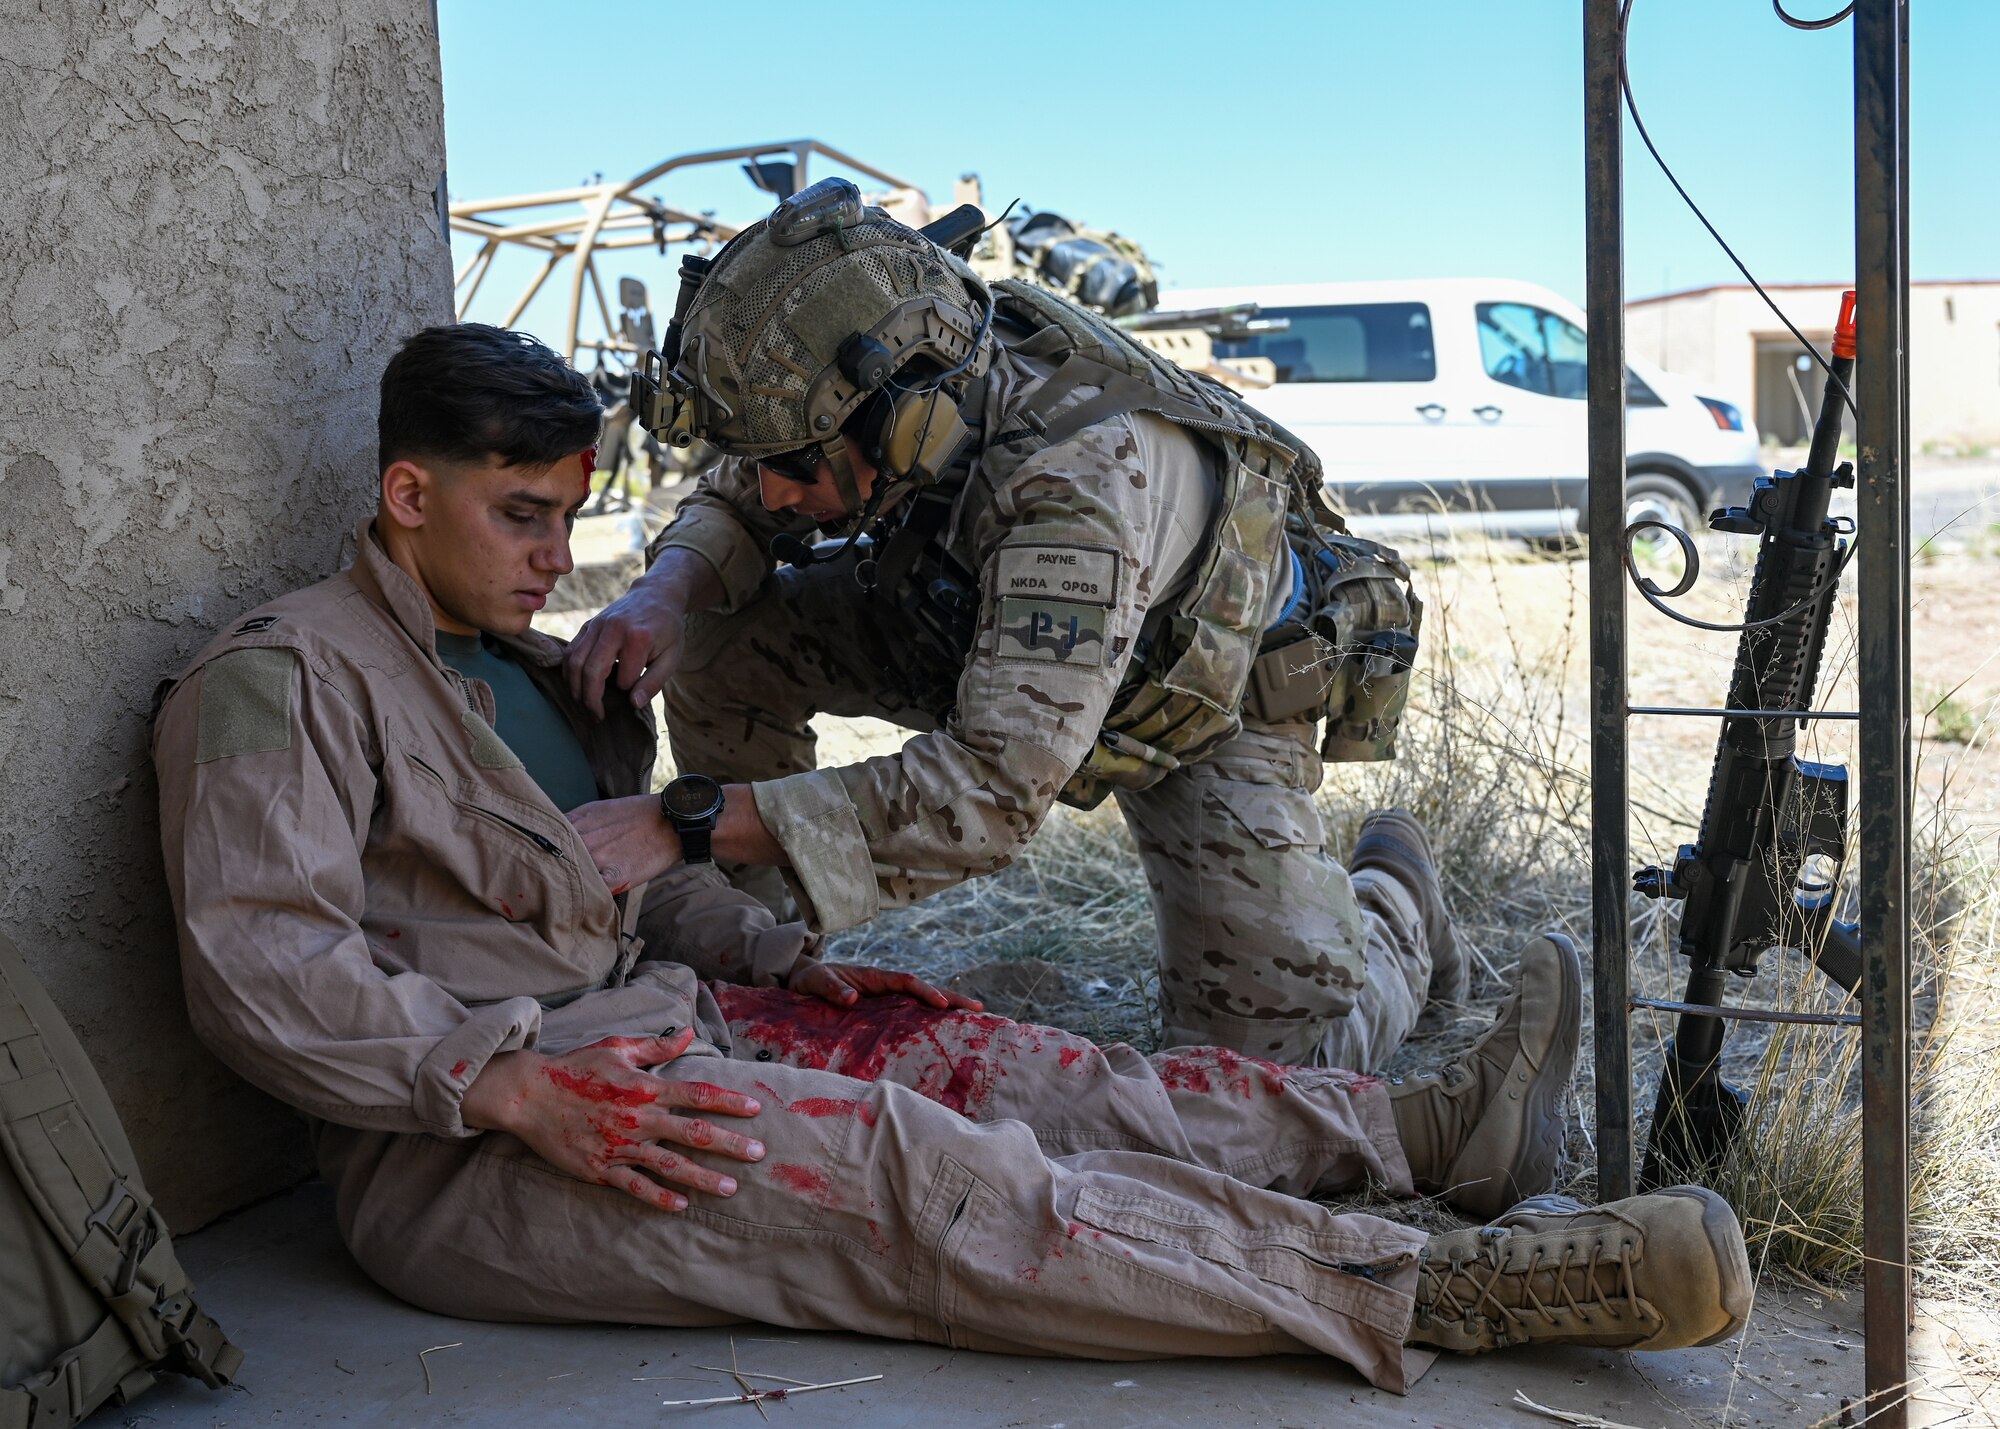 A man in a military uniform checks a simulated car crash victim for injuries.